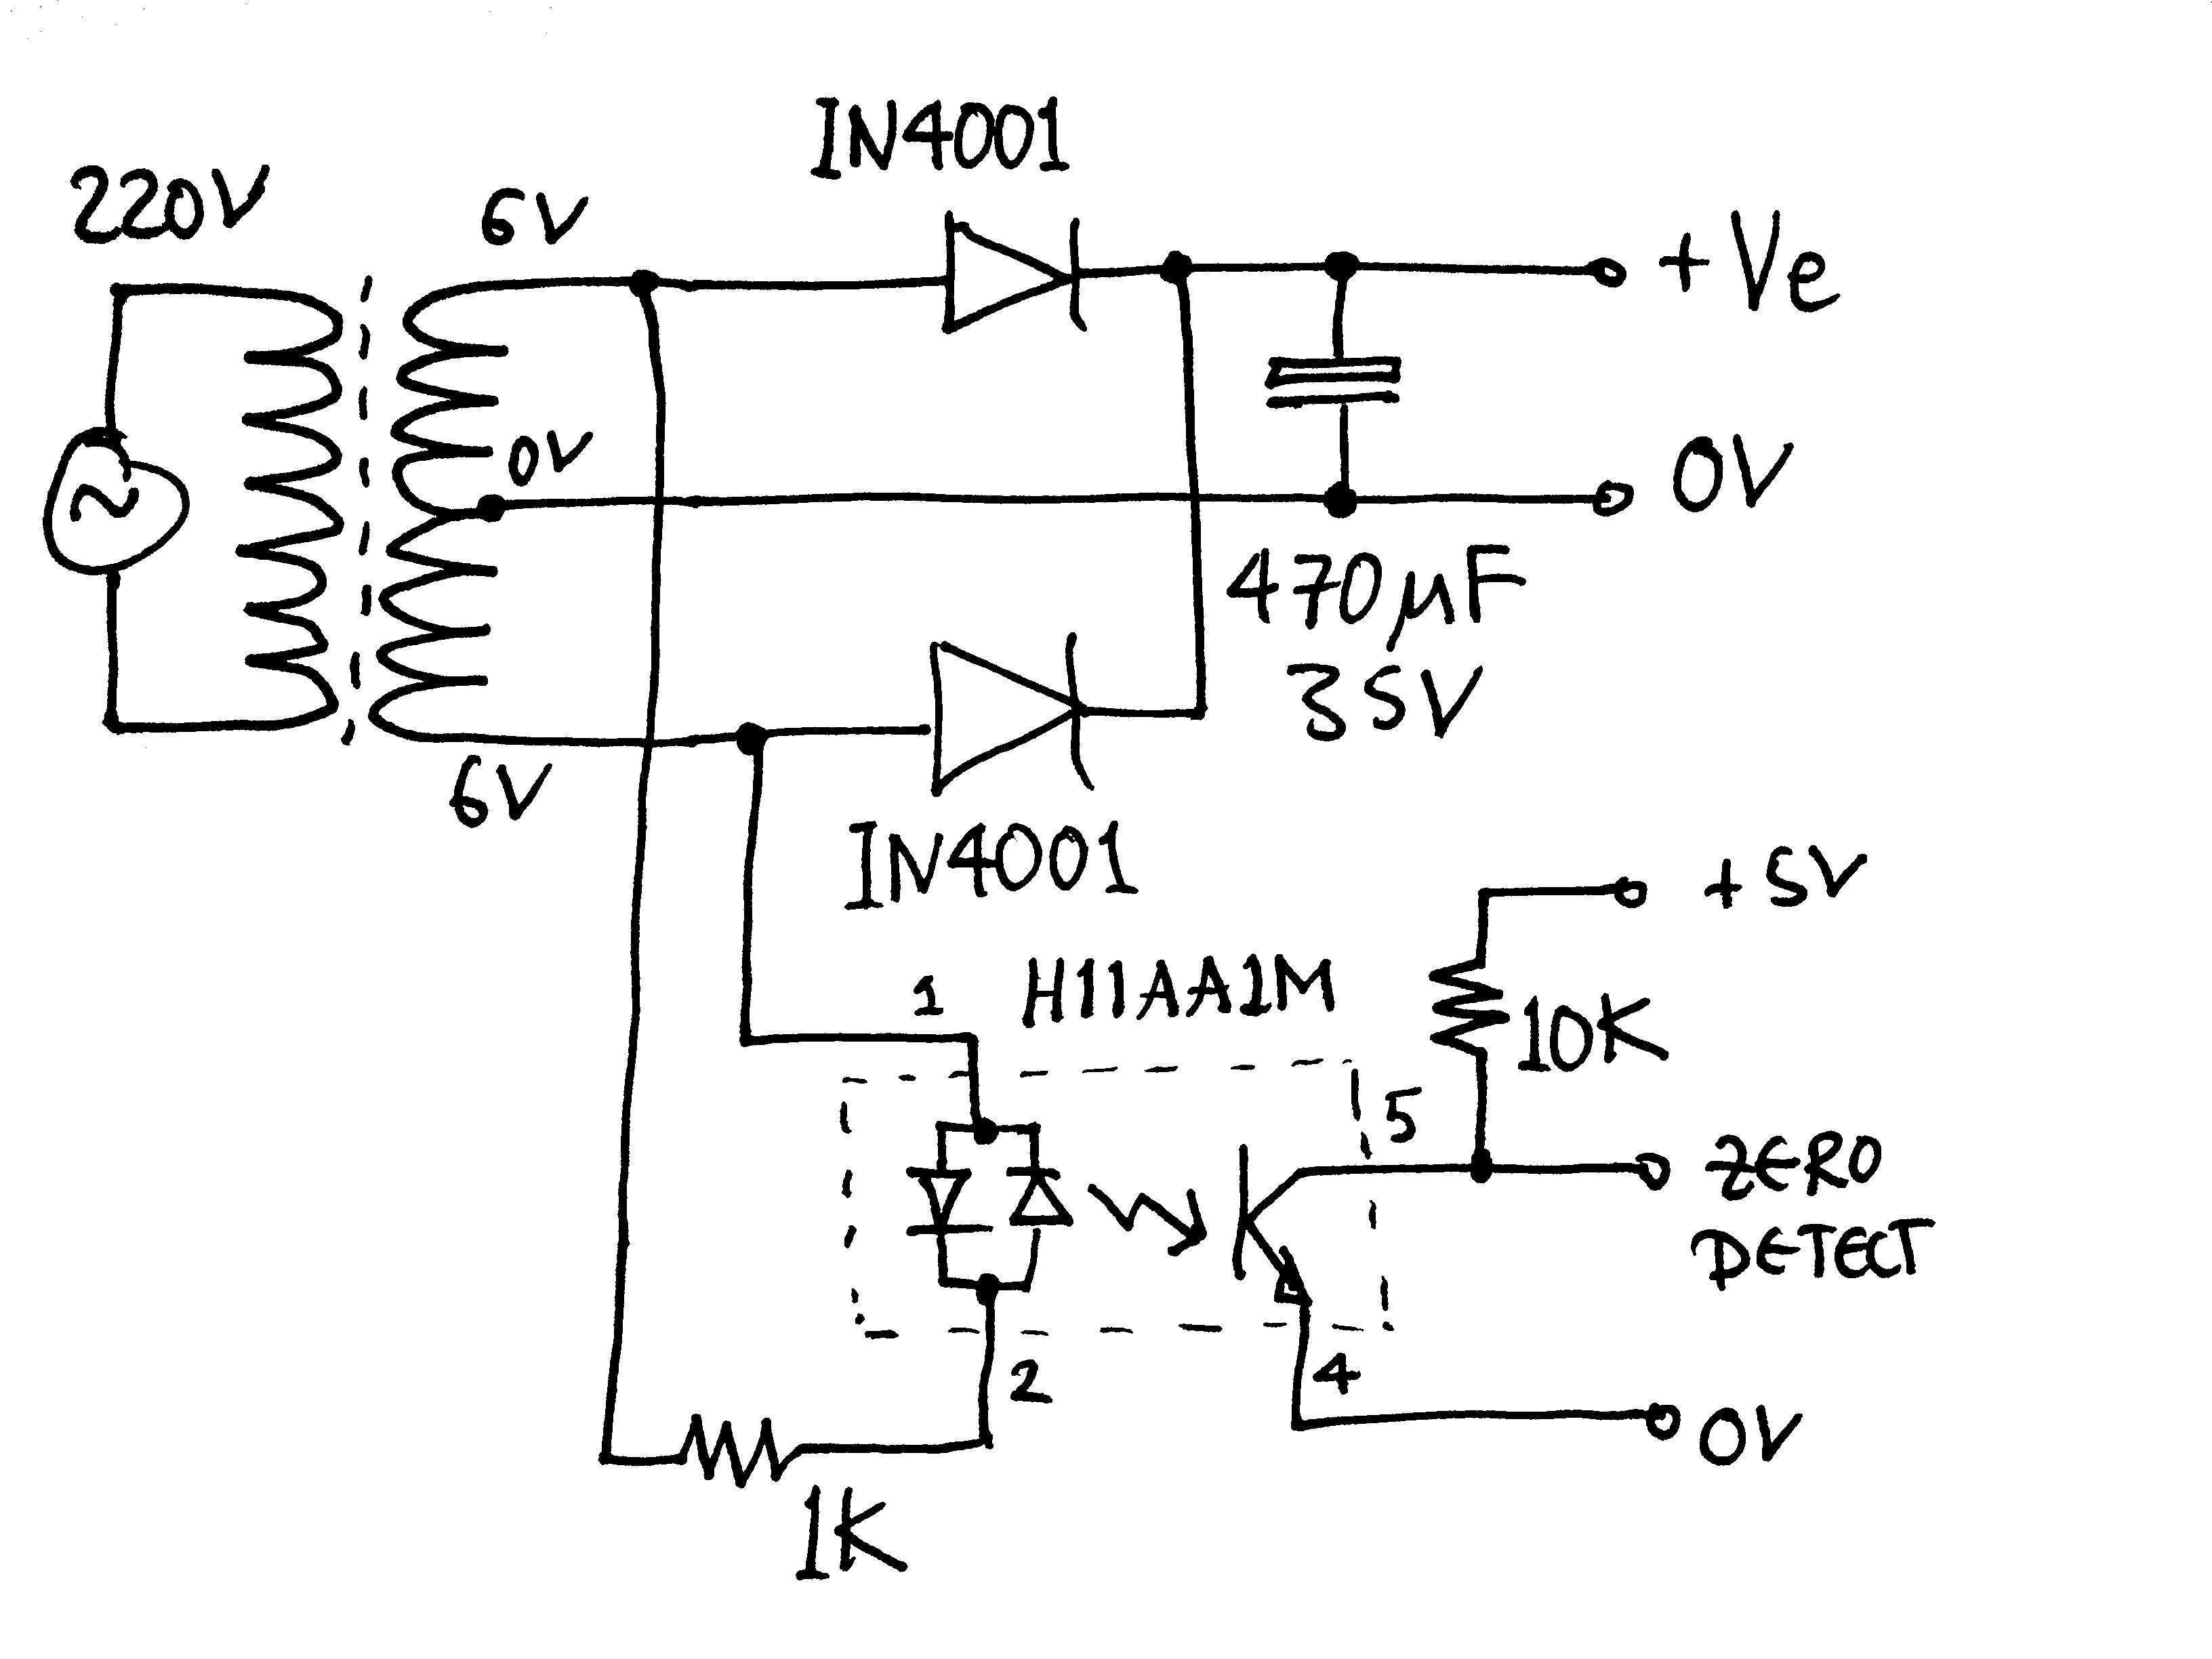 3 Phase Immersion Heater Wiring Diagram Best Wiring 3 Phase Immersion Heater Wiring Diagram Wiring